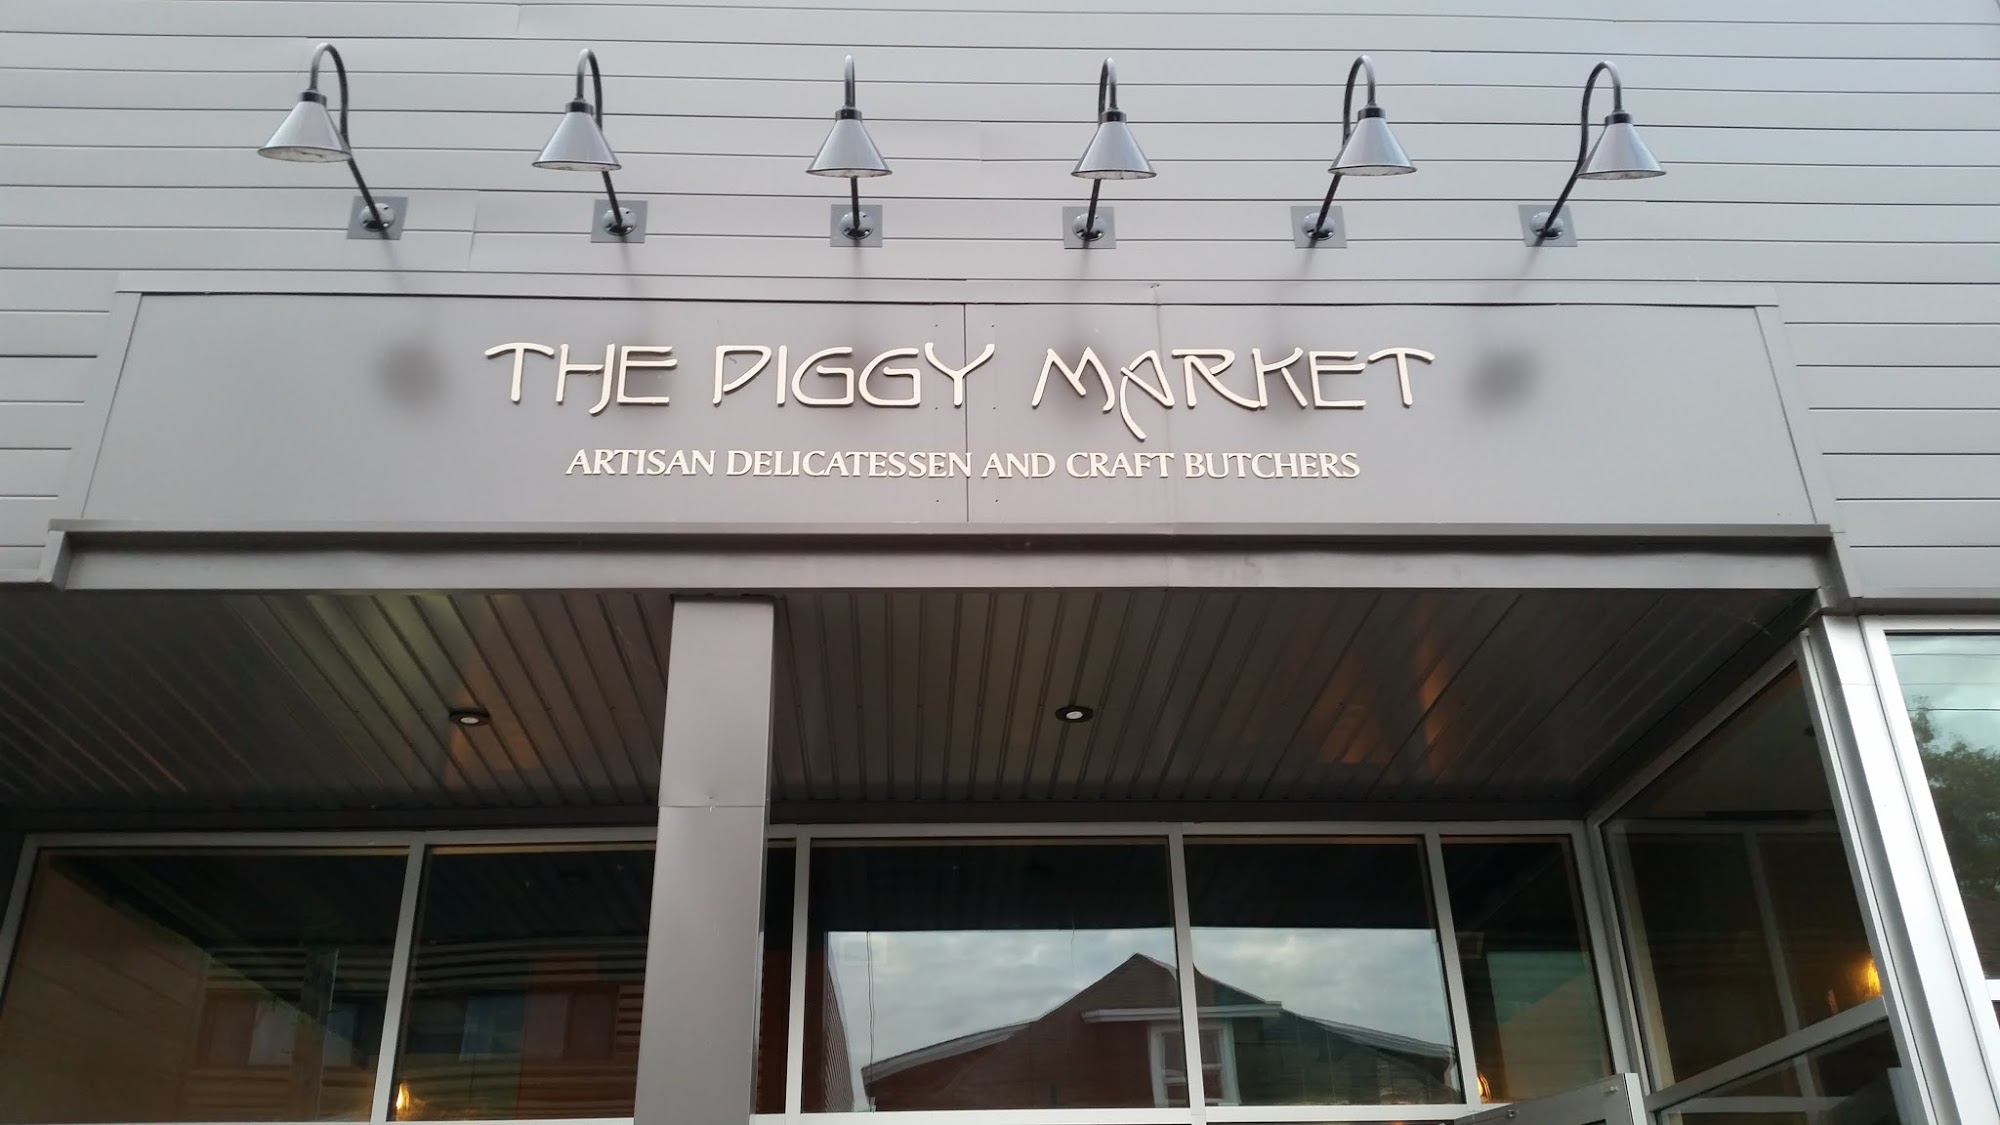 The Piggy Market